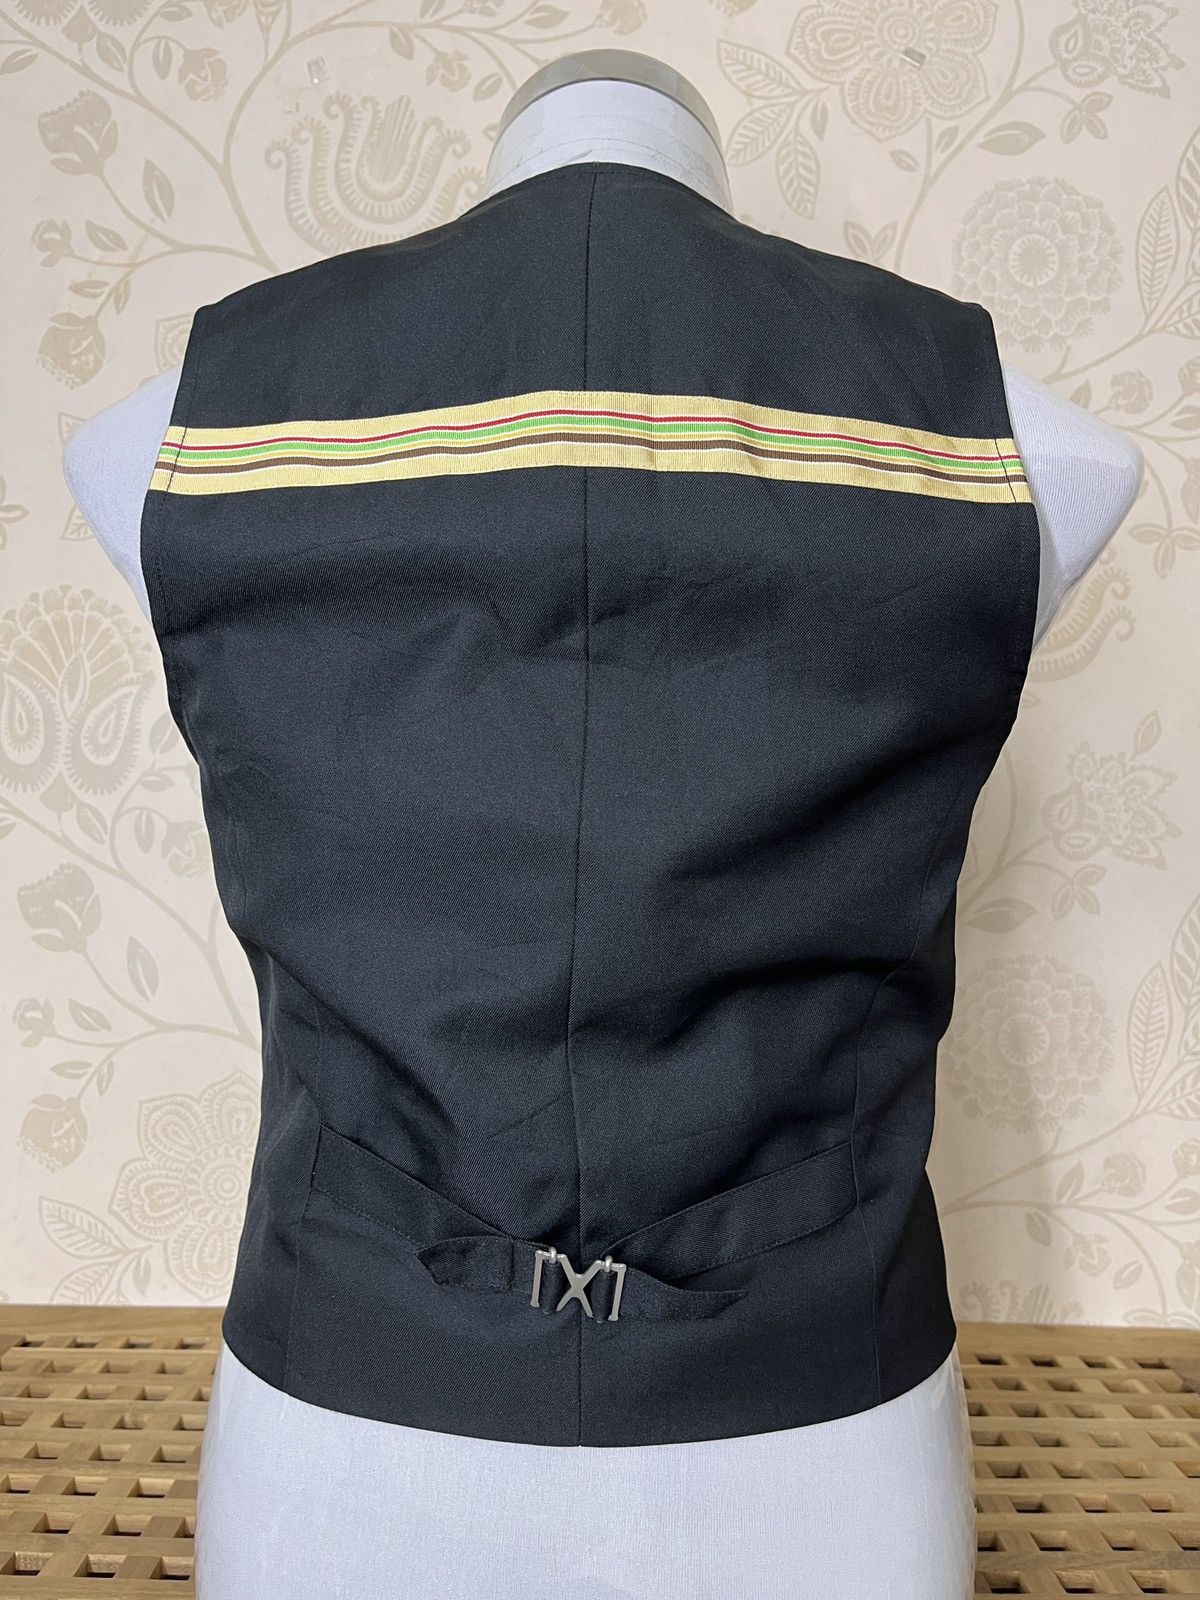 McDonalds Japan Vintage Workers Vest Collector Item - 2